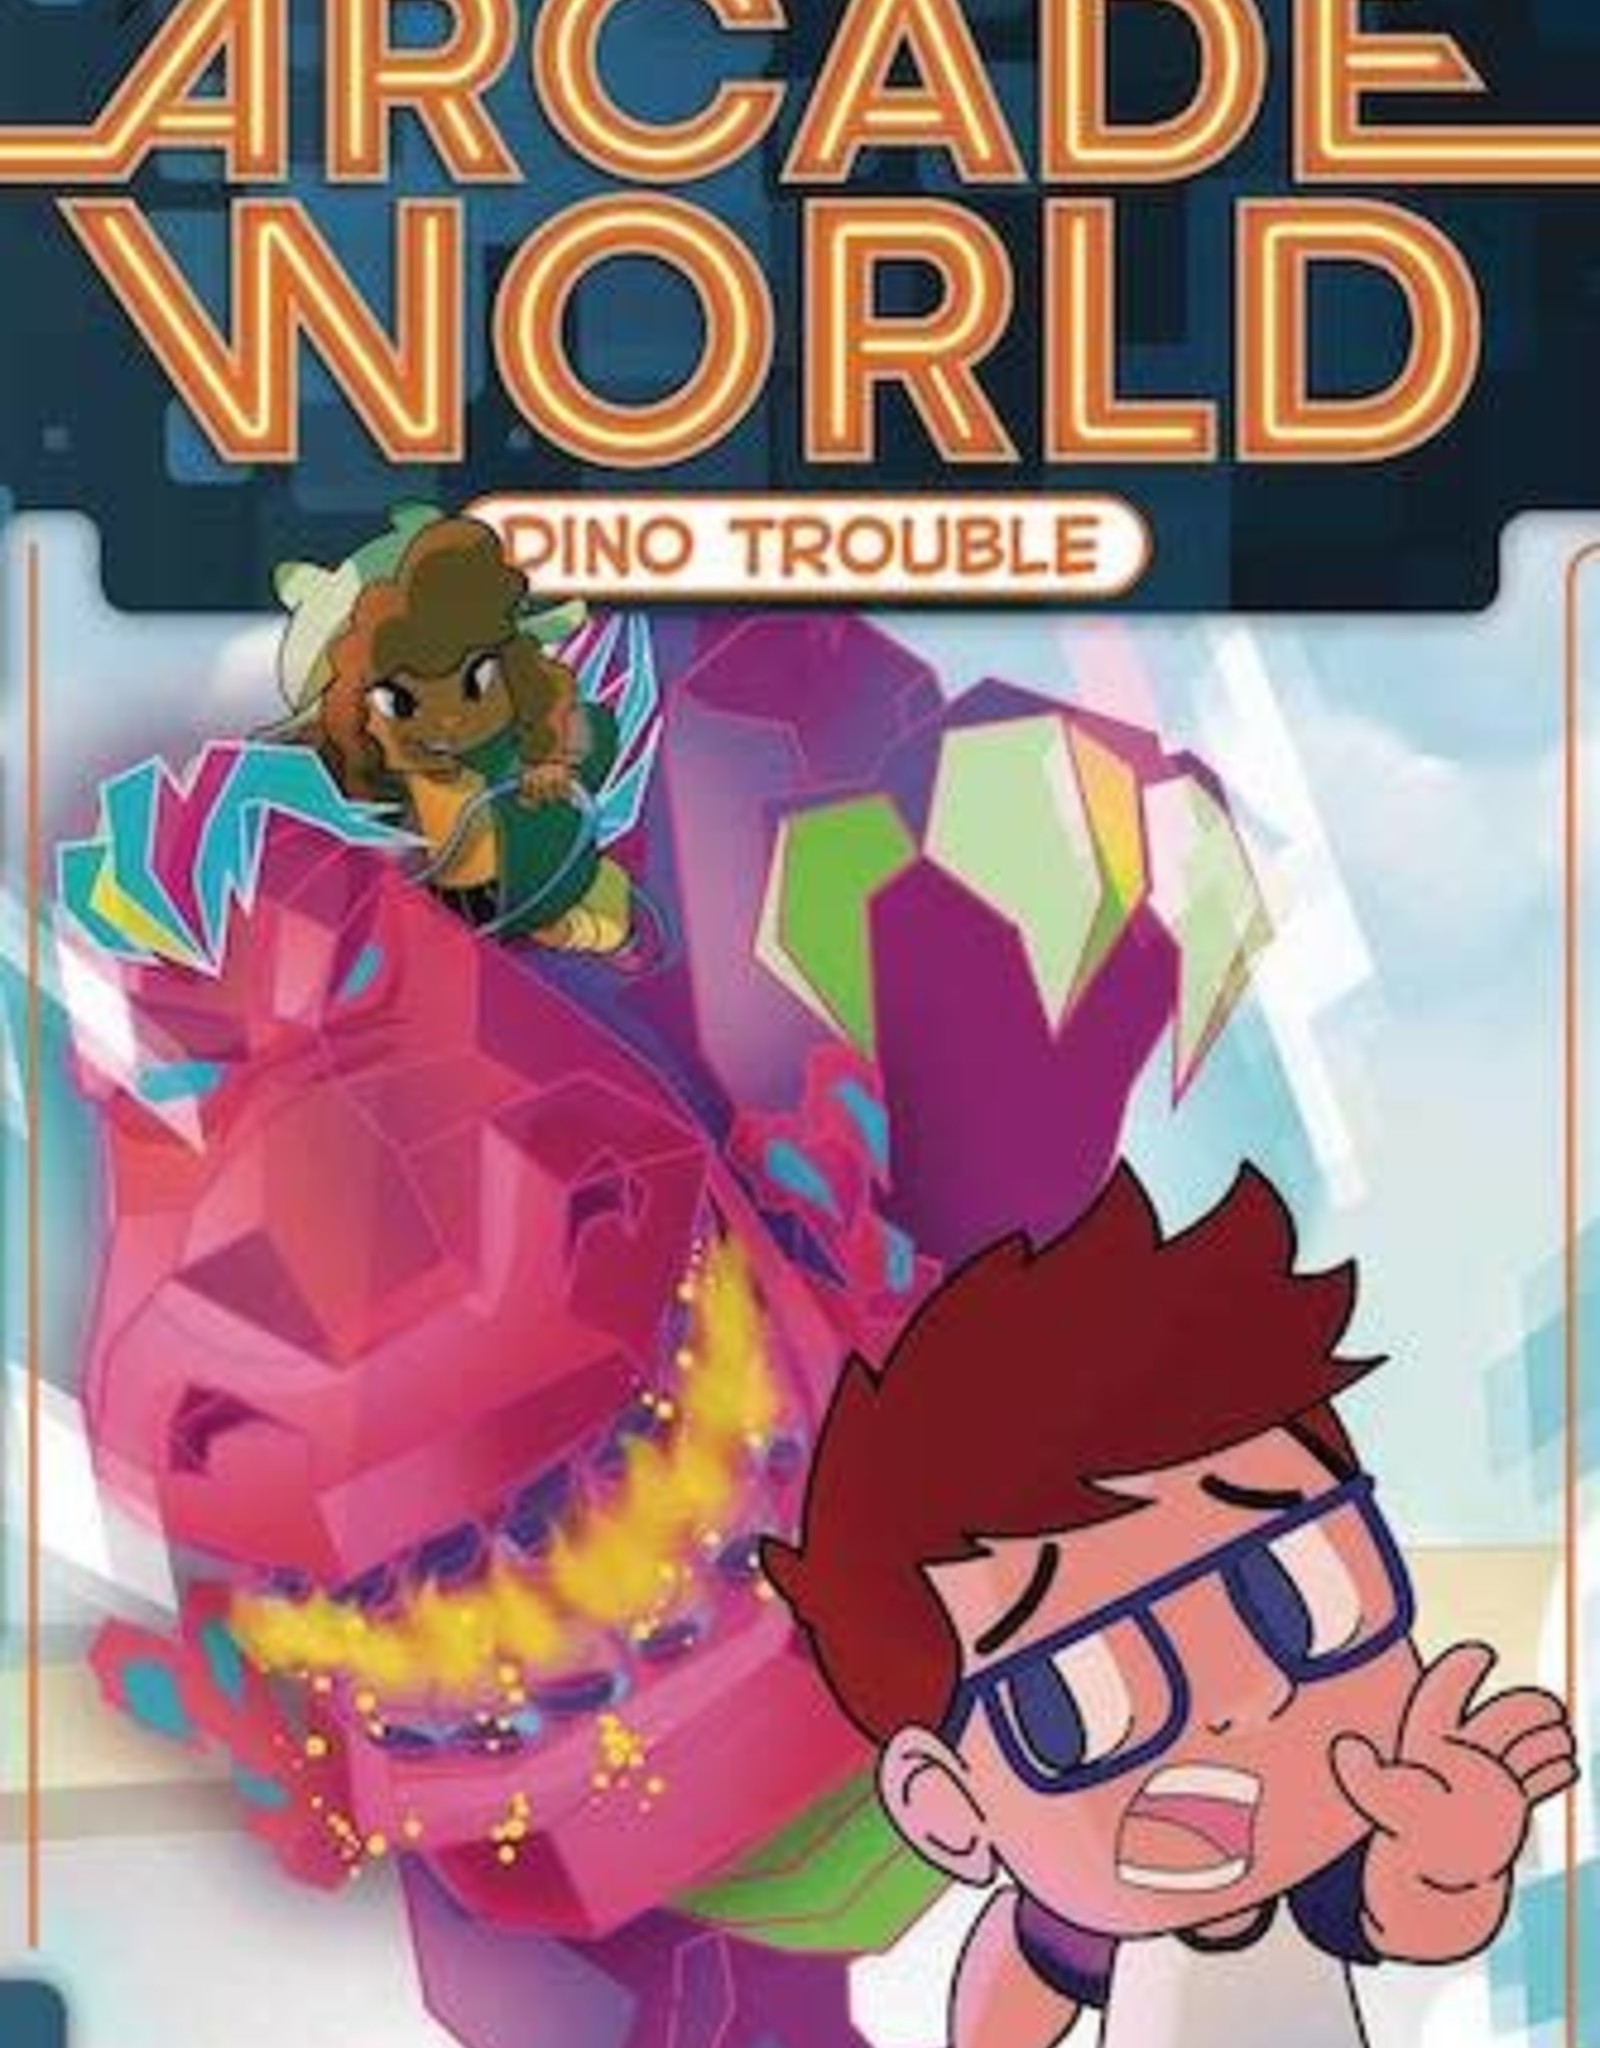 Little Simon Arcade World GN Chapterbook Vol 01 Dino Trouble